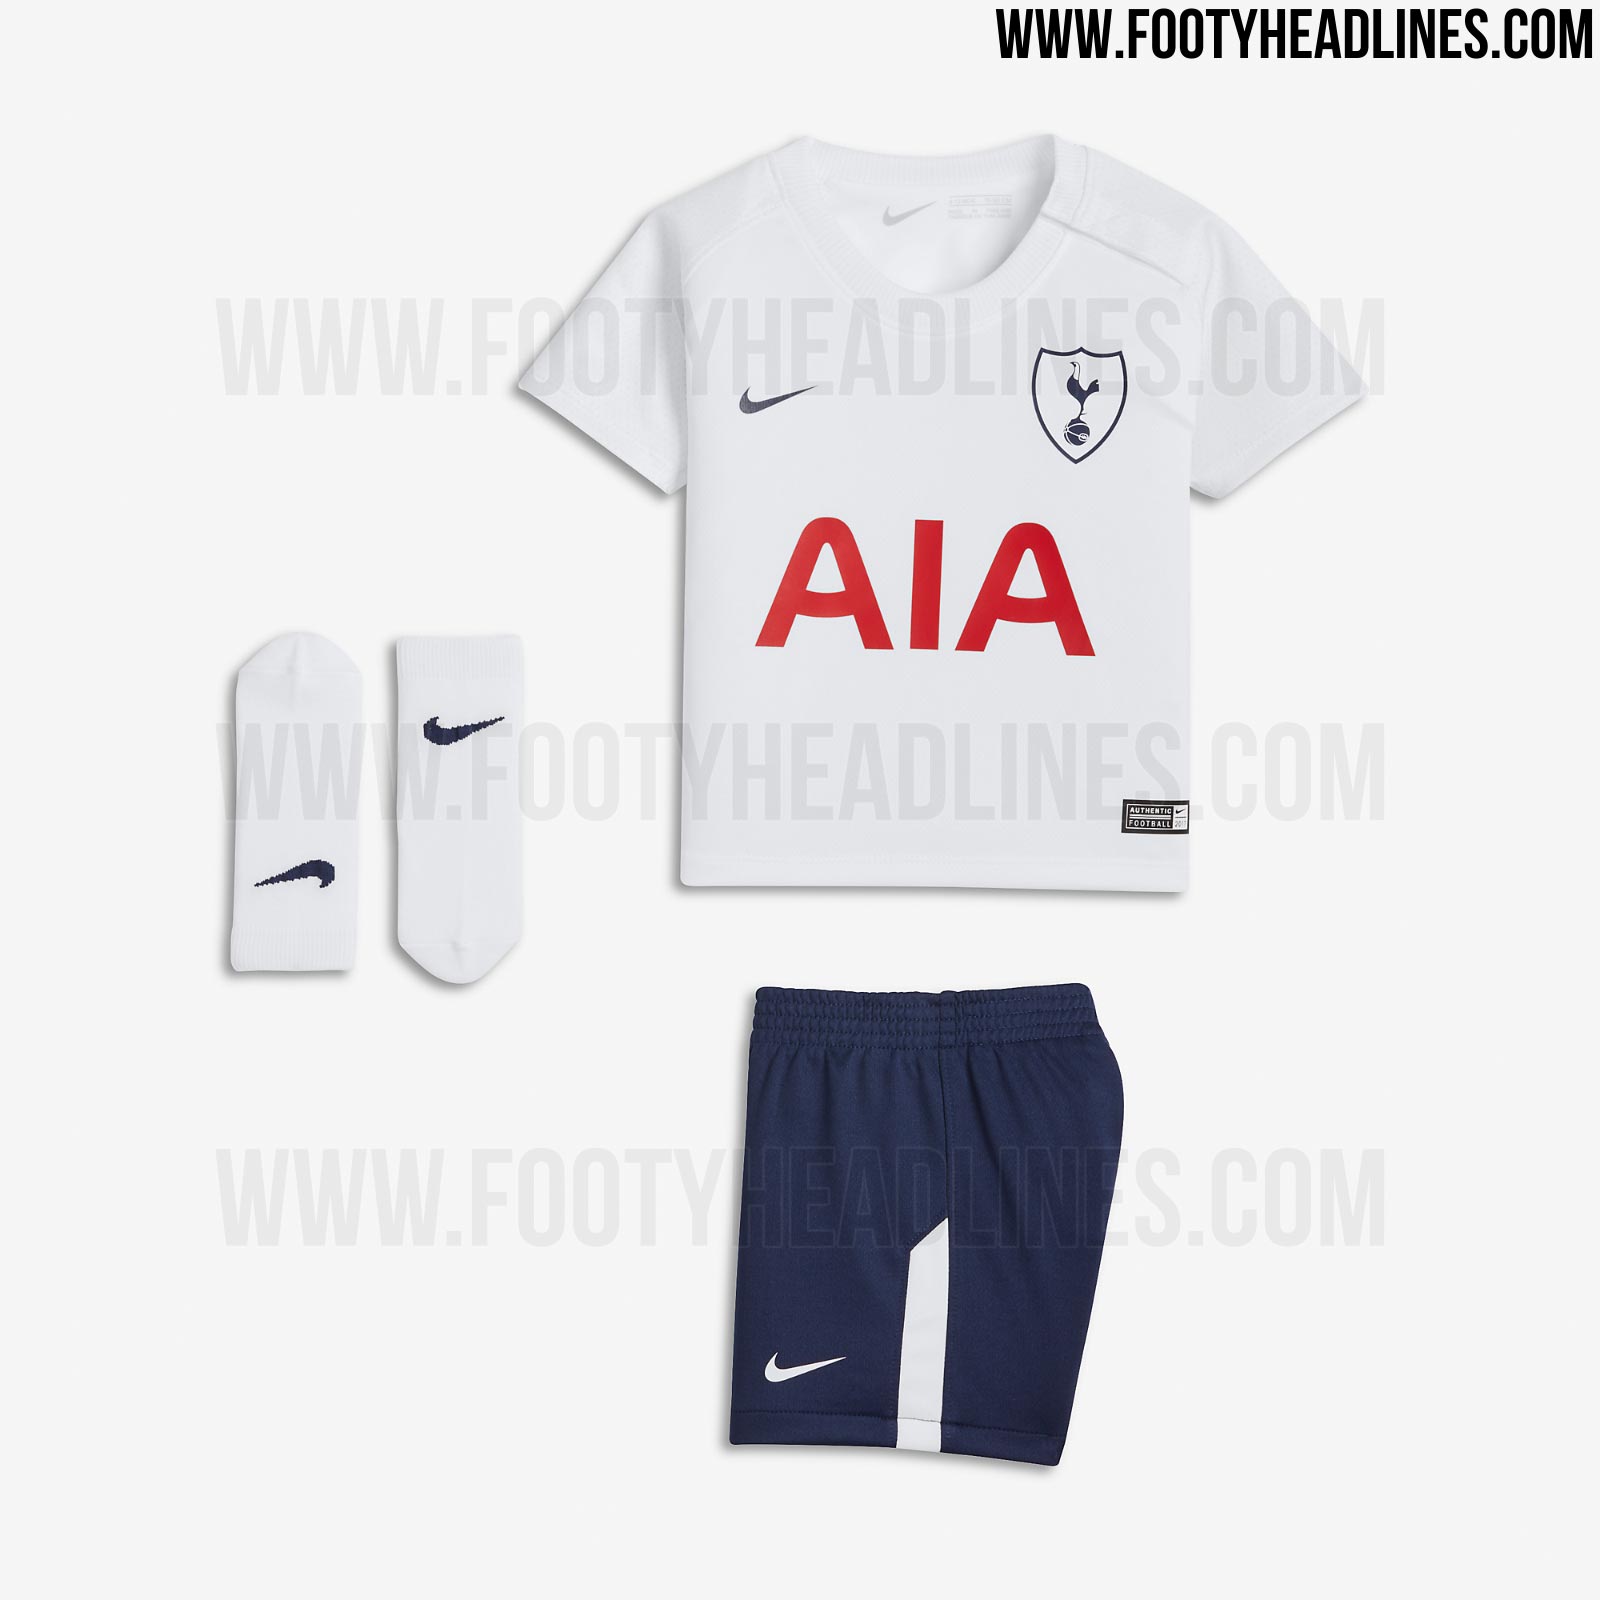 Nike Tottenham Hotspur 17-18 Away Kit Released - Footy Headlines